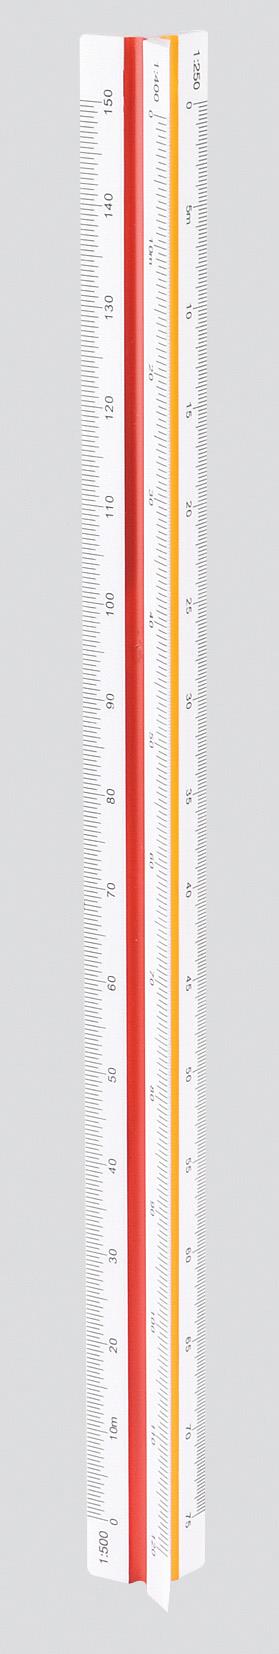 30cm/12 inch Triangular Scale Ruler